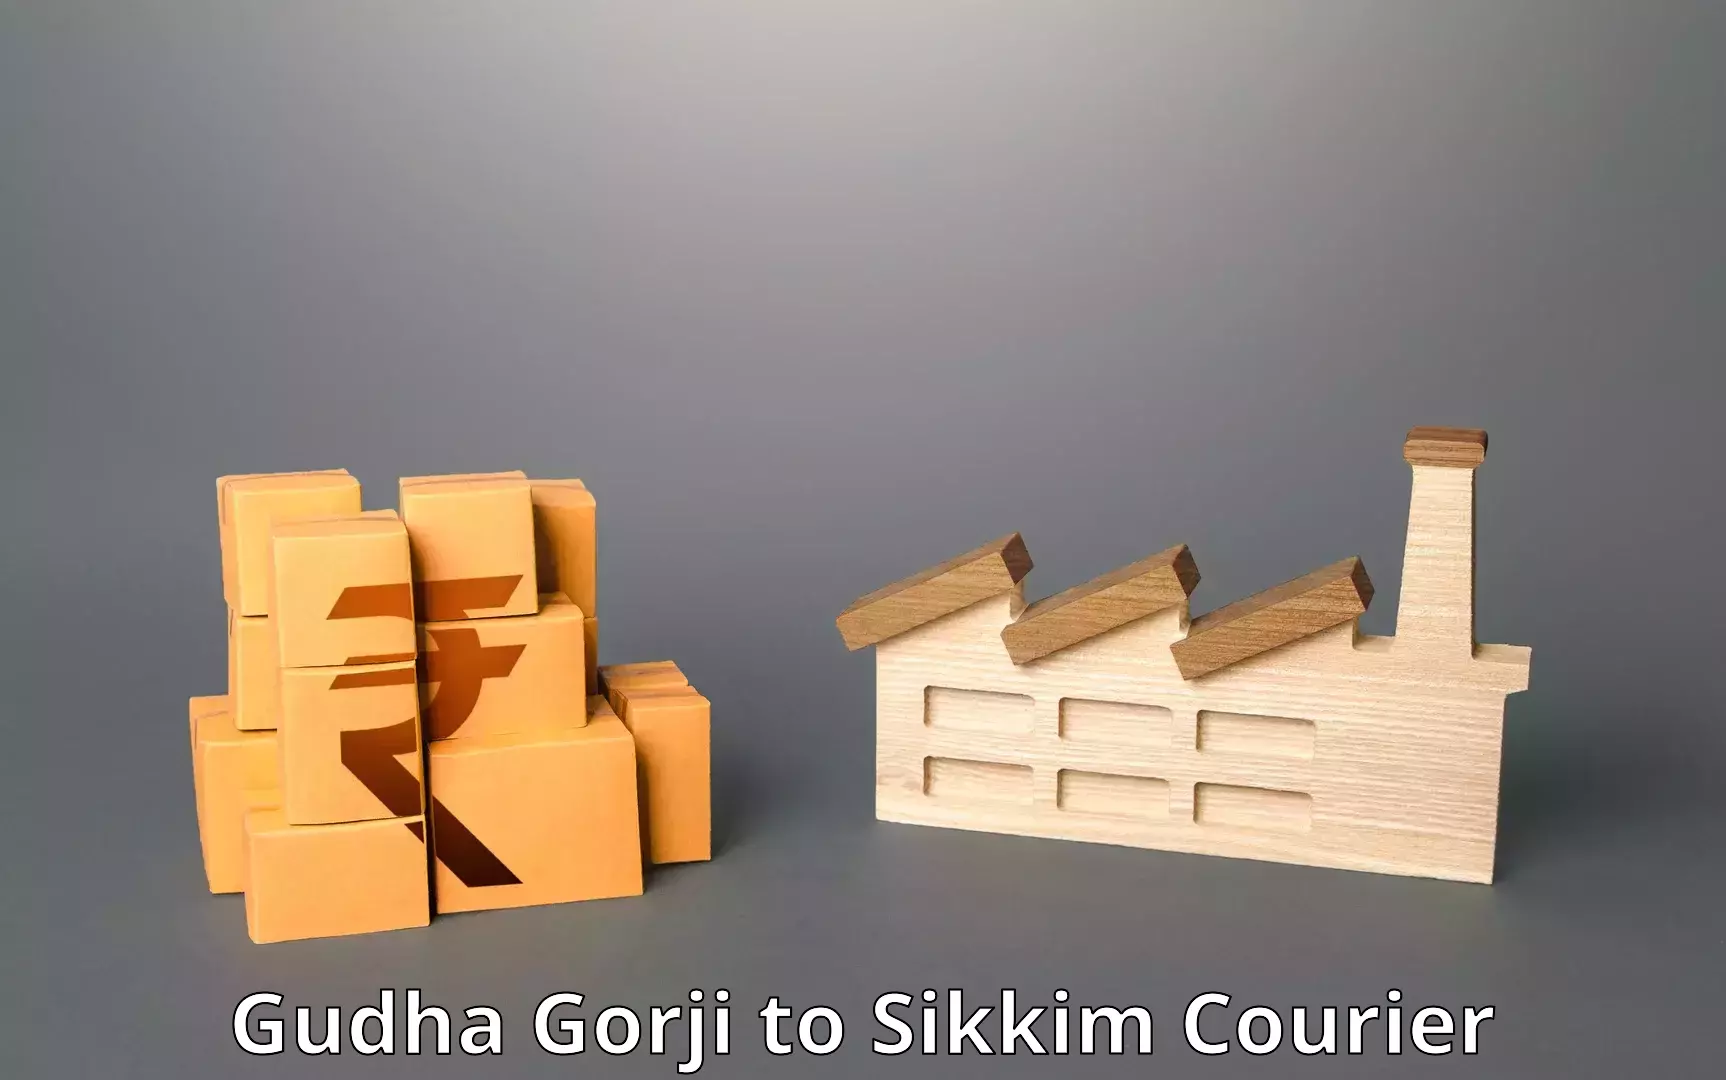 High-performance logistics Gudha Gorji to Sikkim